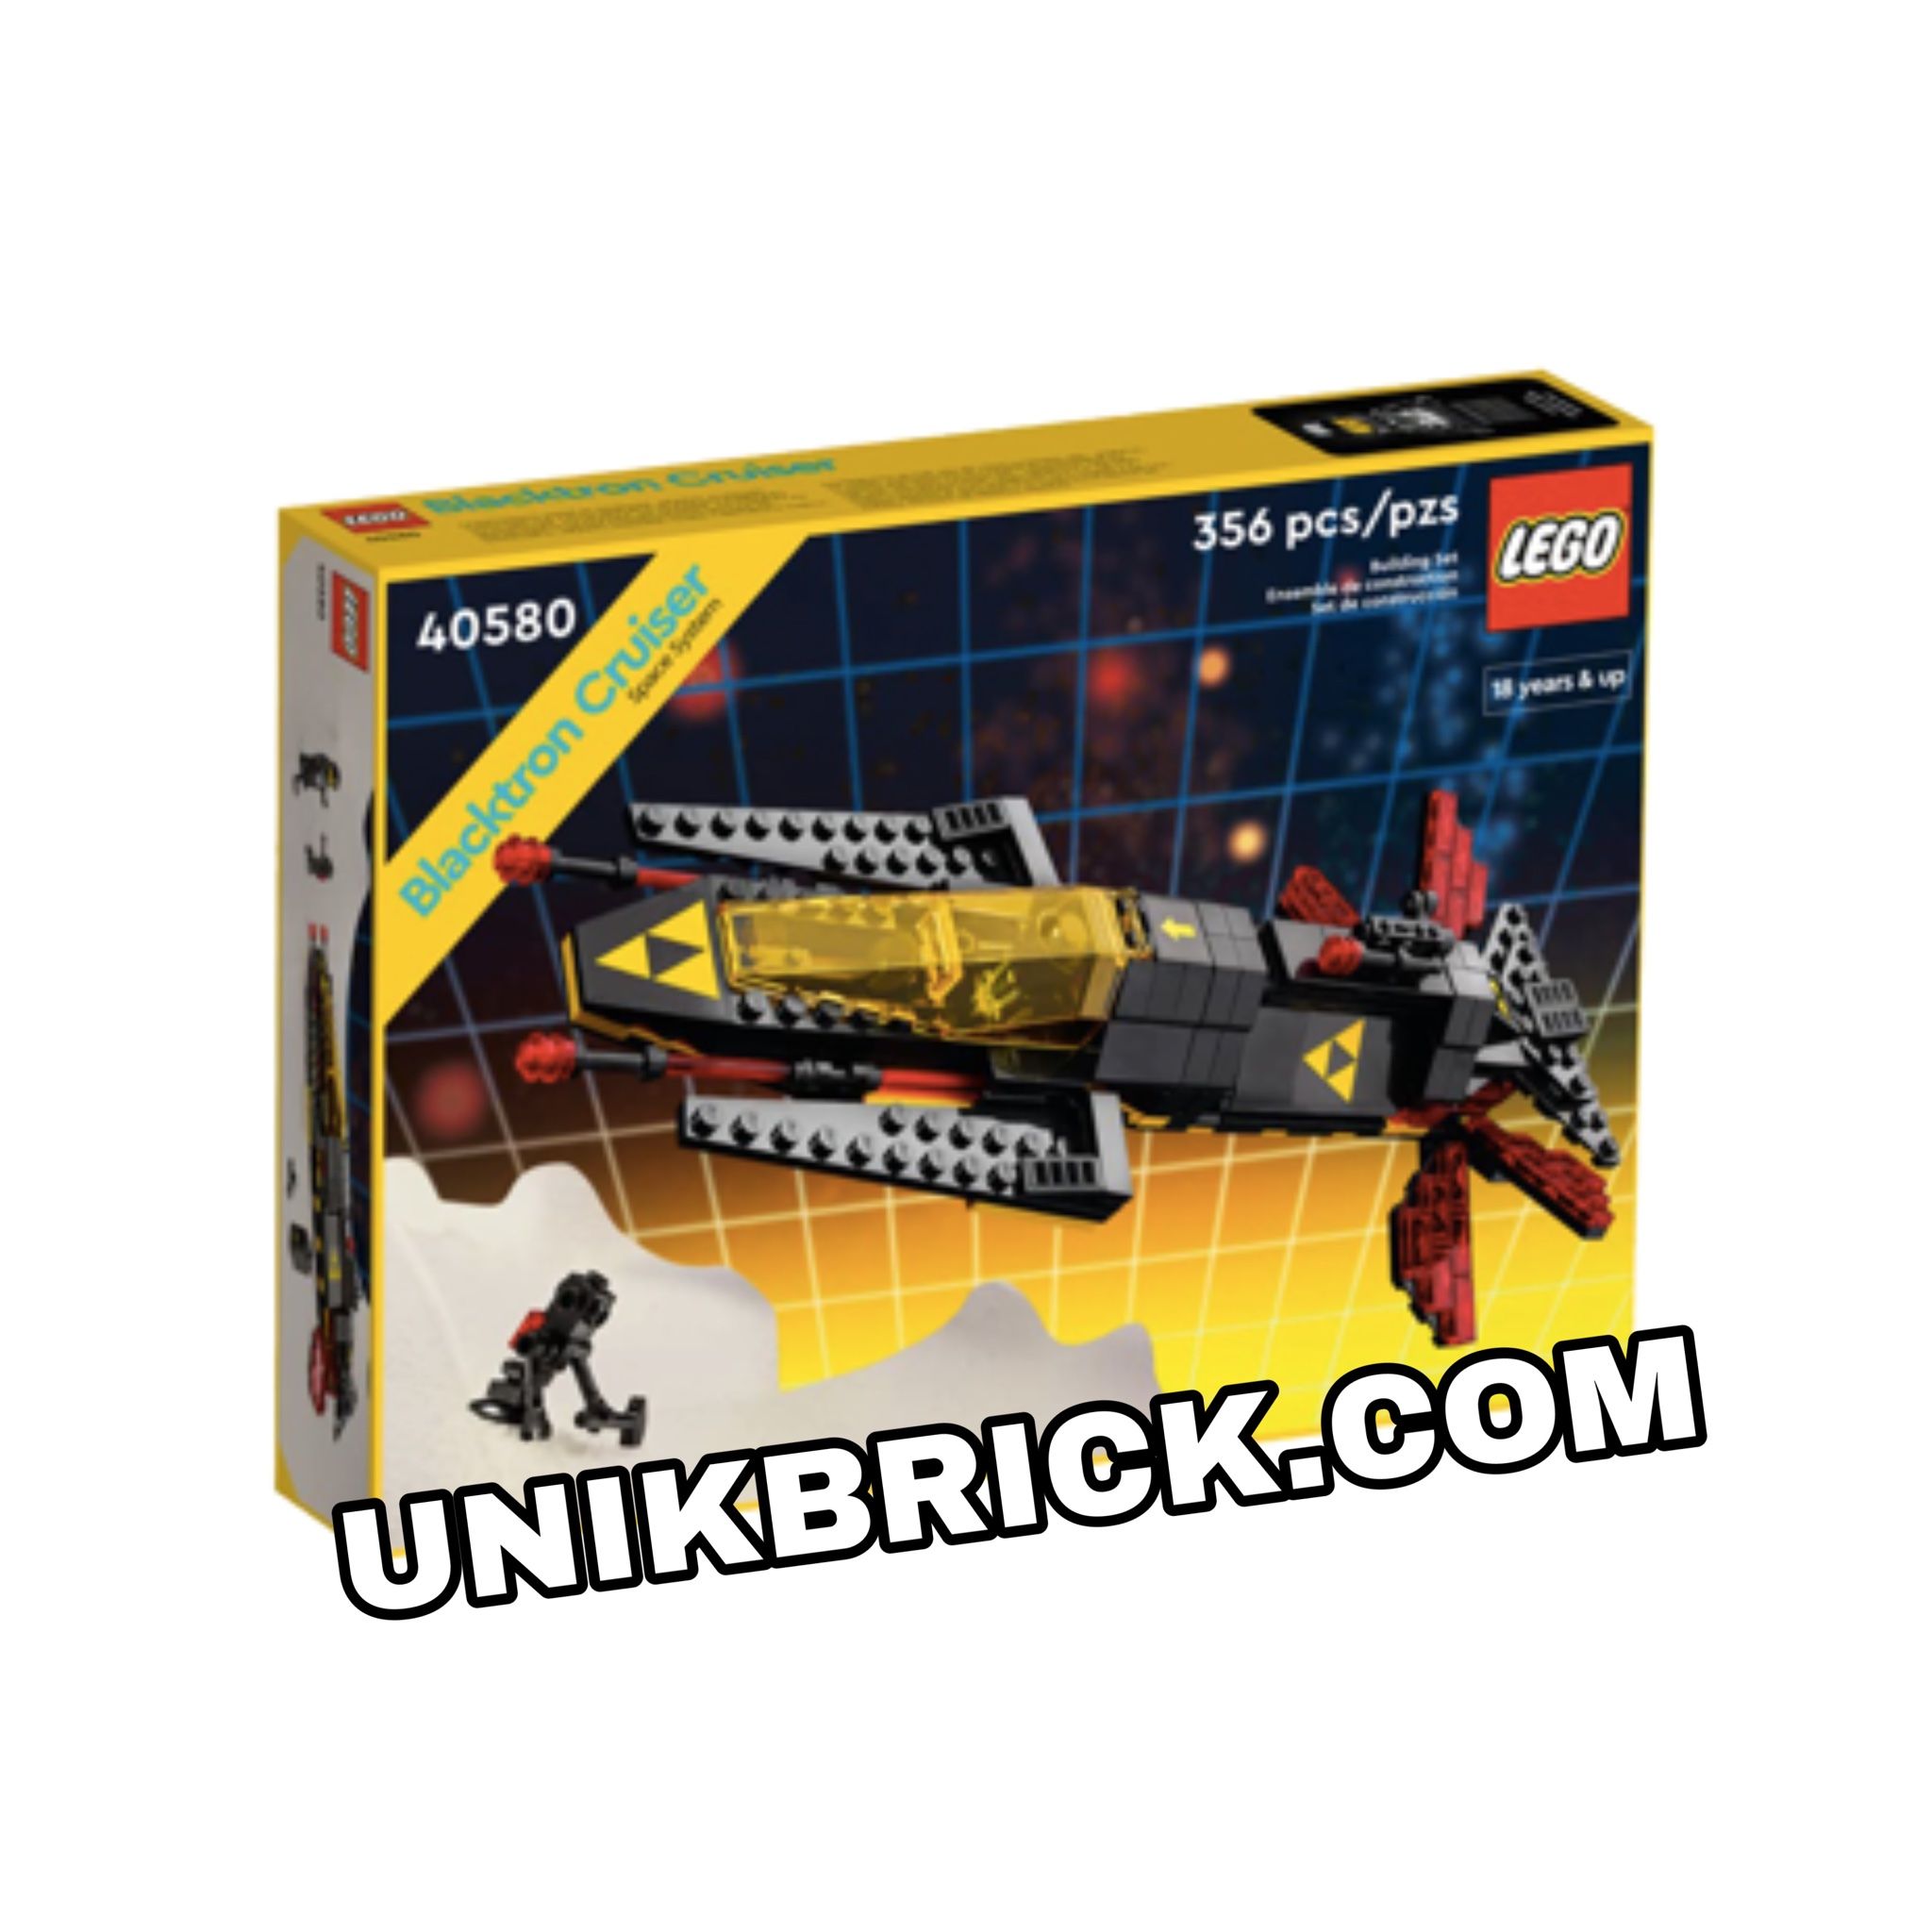 [CÓ HÀNG] LEGO 40580 Blacktron Cruiser